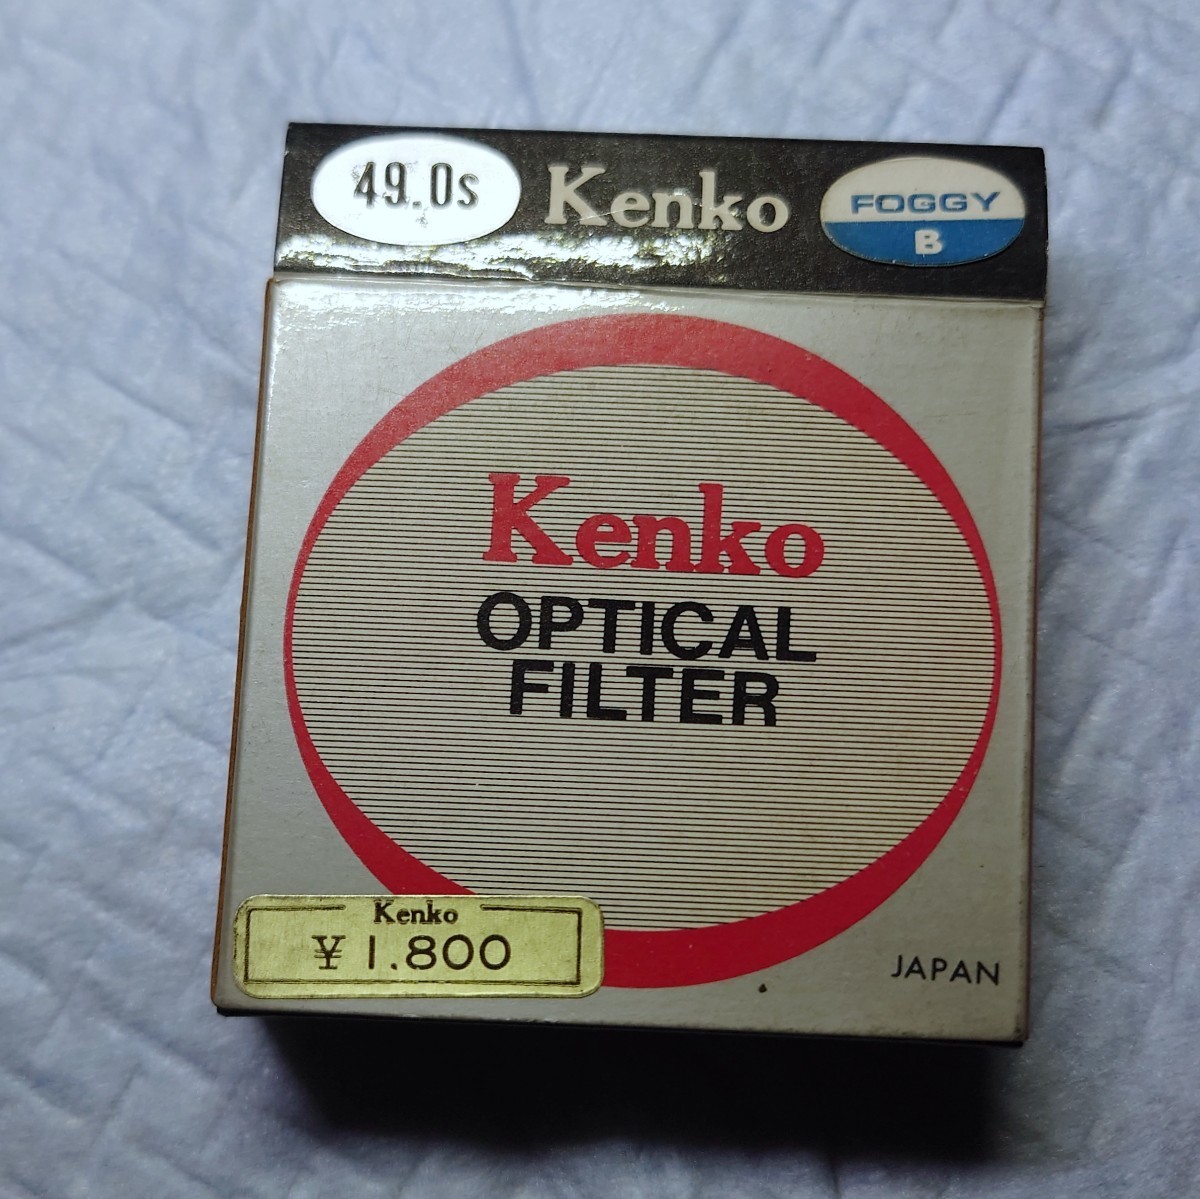 Kenko Kenko линзы фильтр Opti karu фильтр fogi-B 49mm